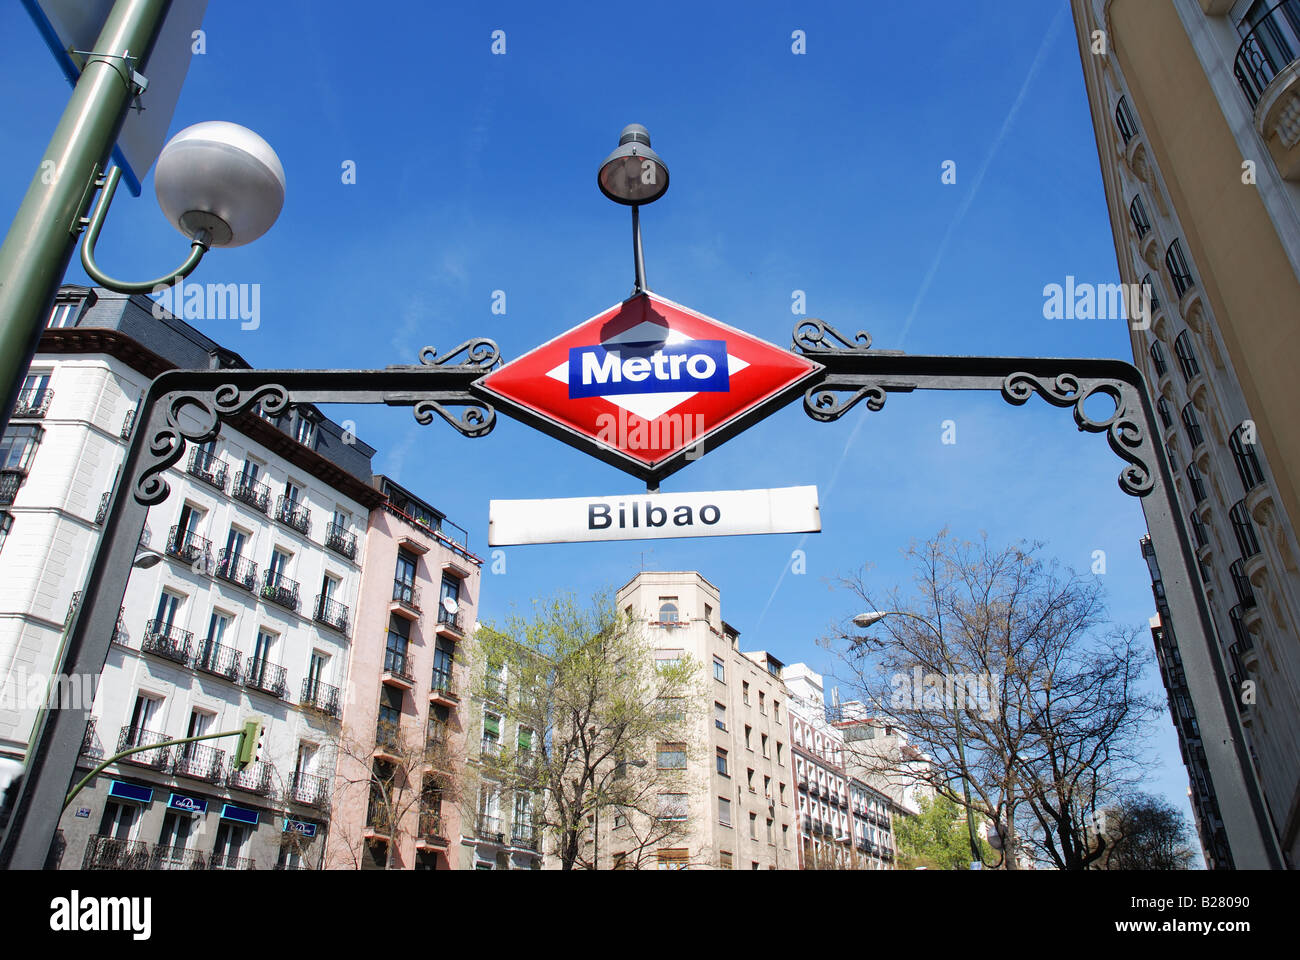 Bilbao Metro sign. Madrid. Spain. Stock Photo